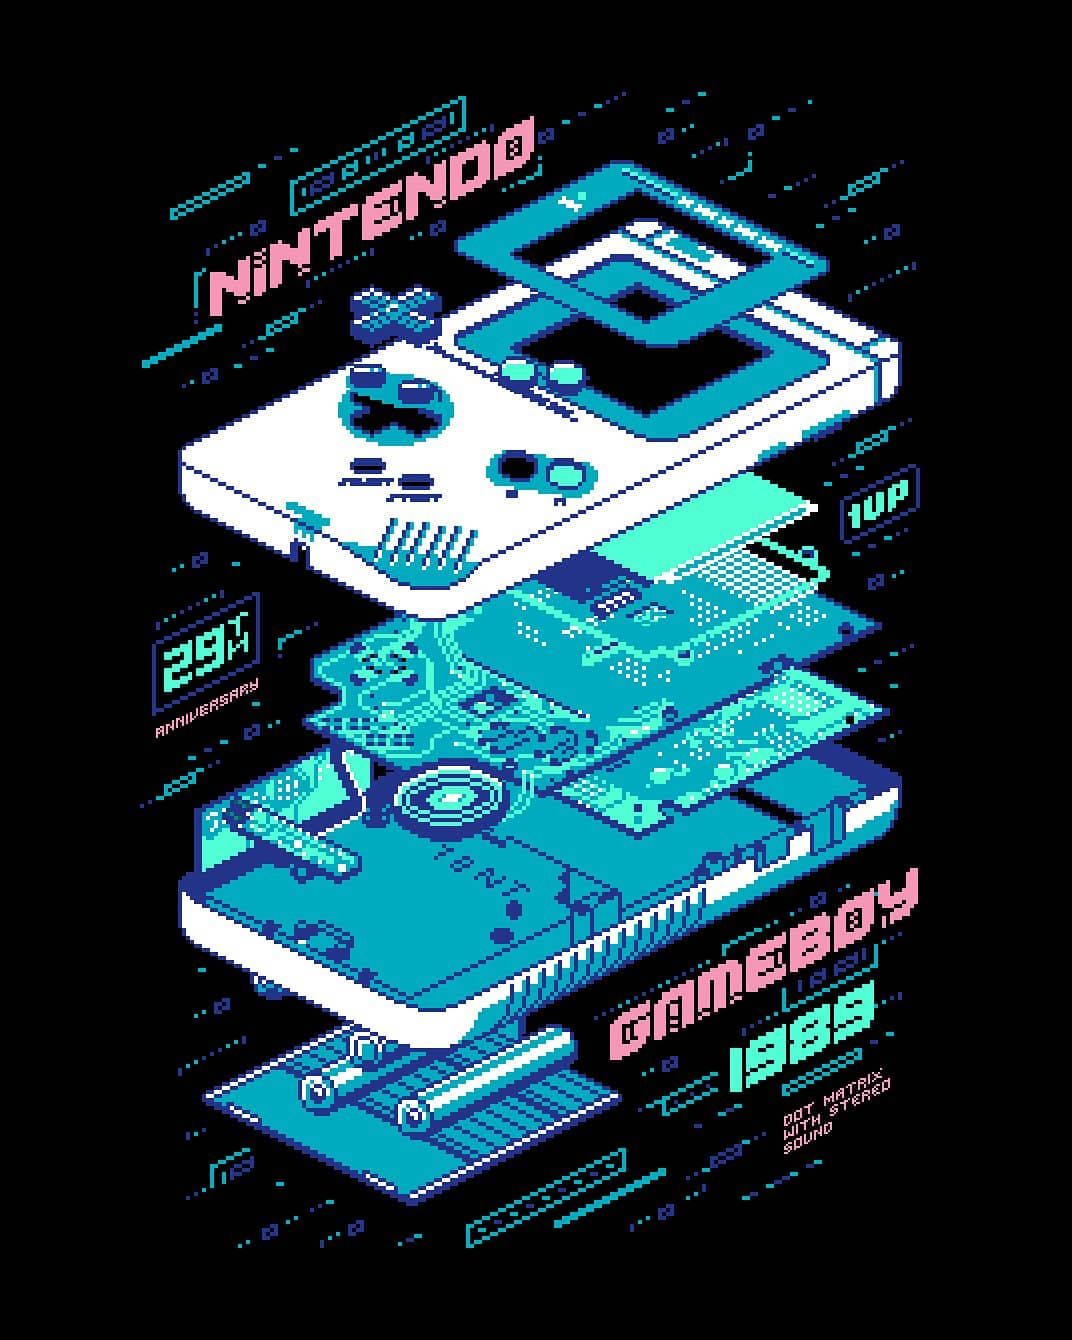 Nintendo Gameboy. Pixel art games, Nintendo art, Vaporwave art